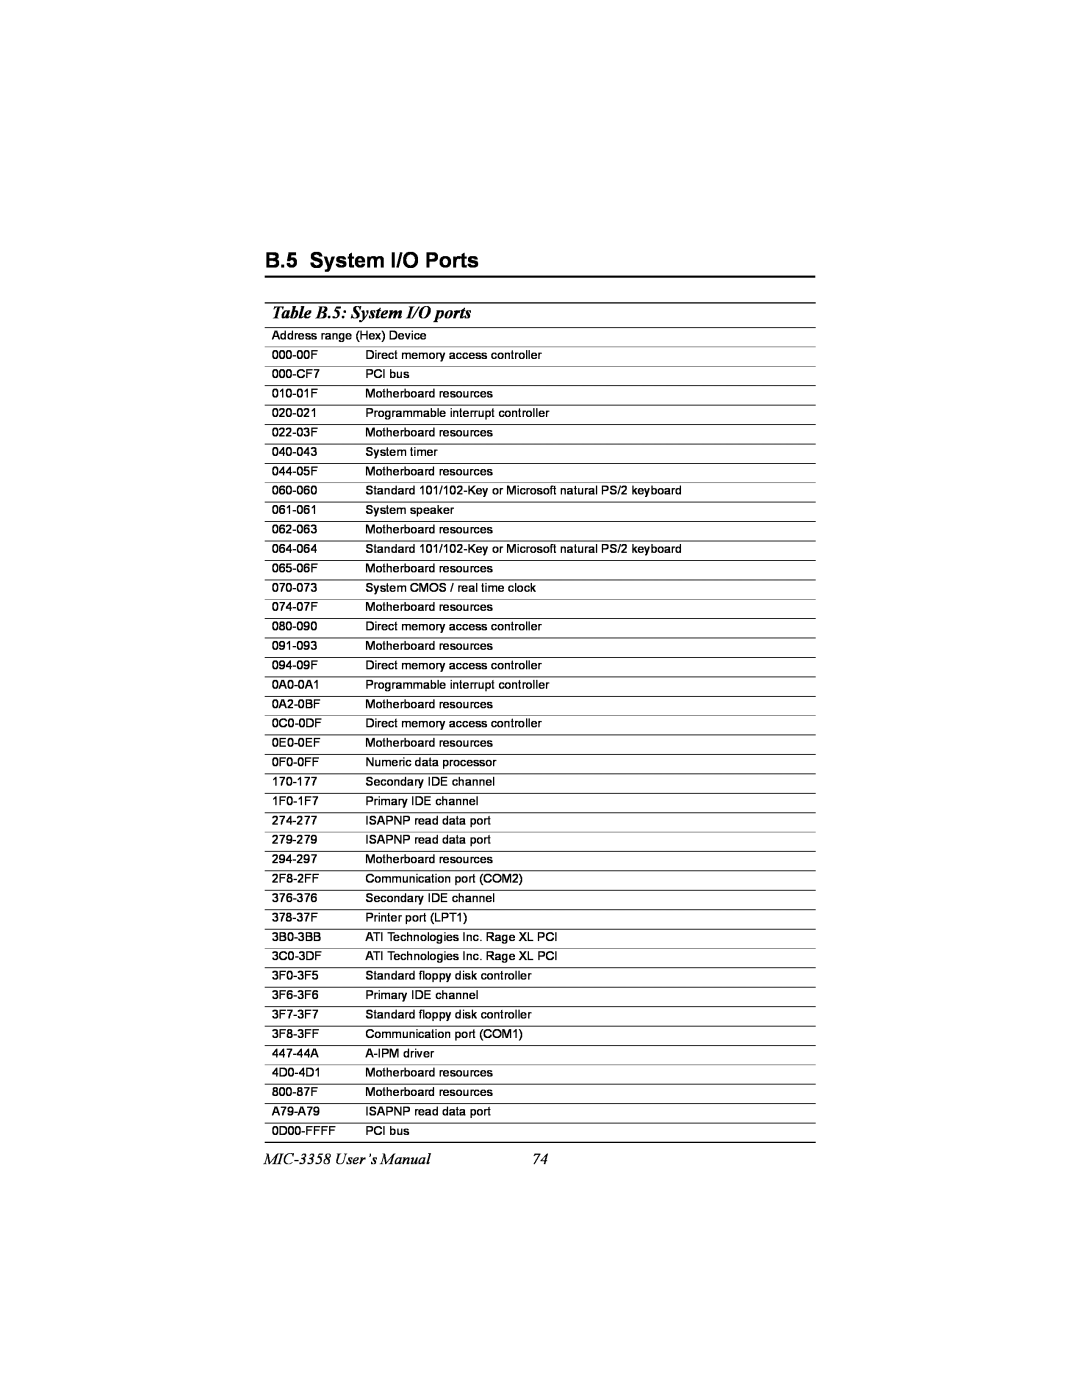 Intel user manual B.5 System I/O Ports, Table B.5 System I/O ports, MIC-3358 User’s Manual 